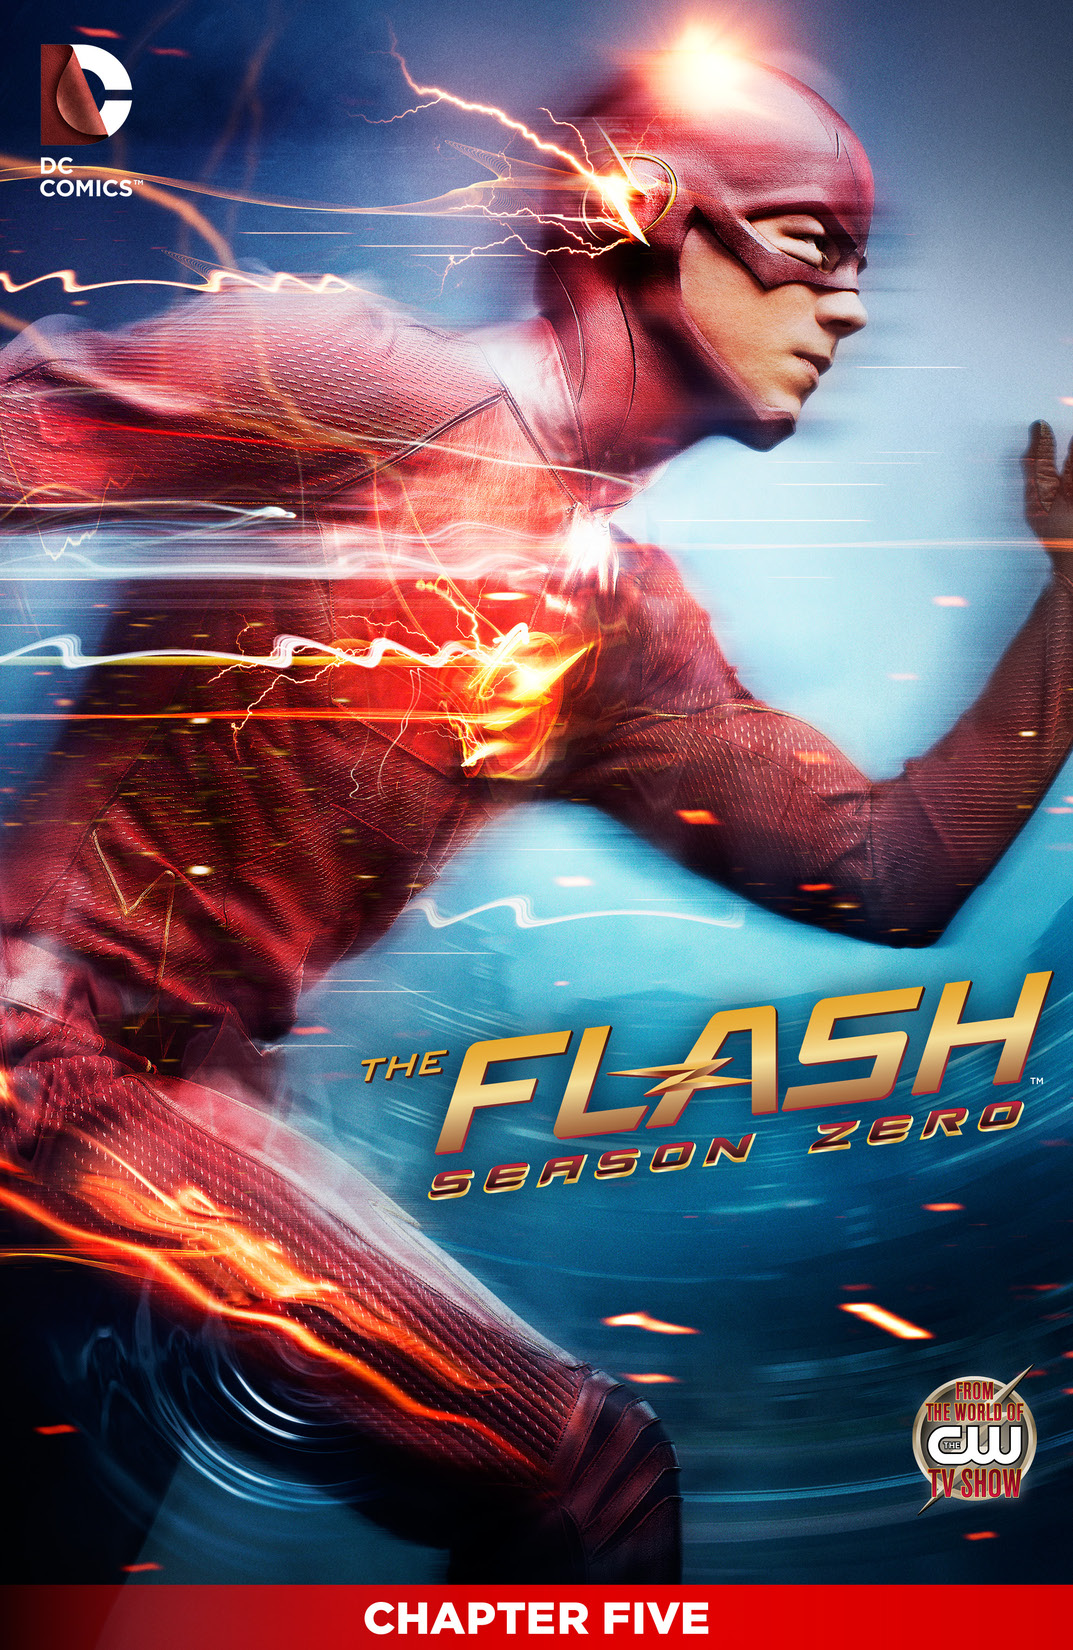 The Flash: Season Zero #5 preview images